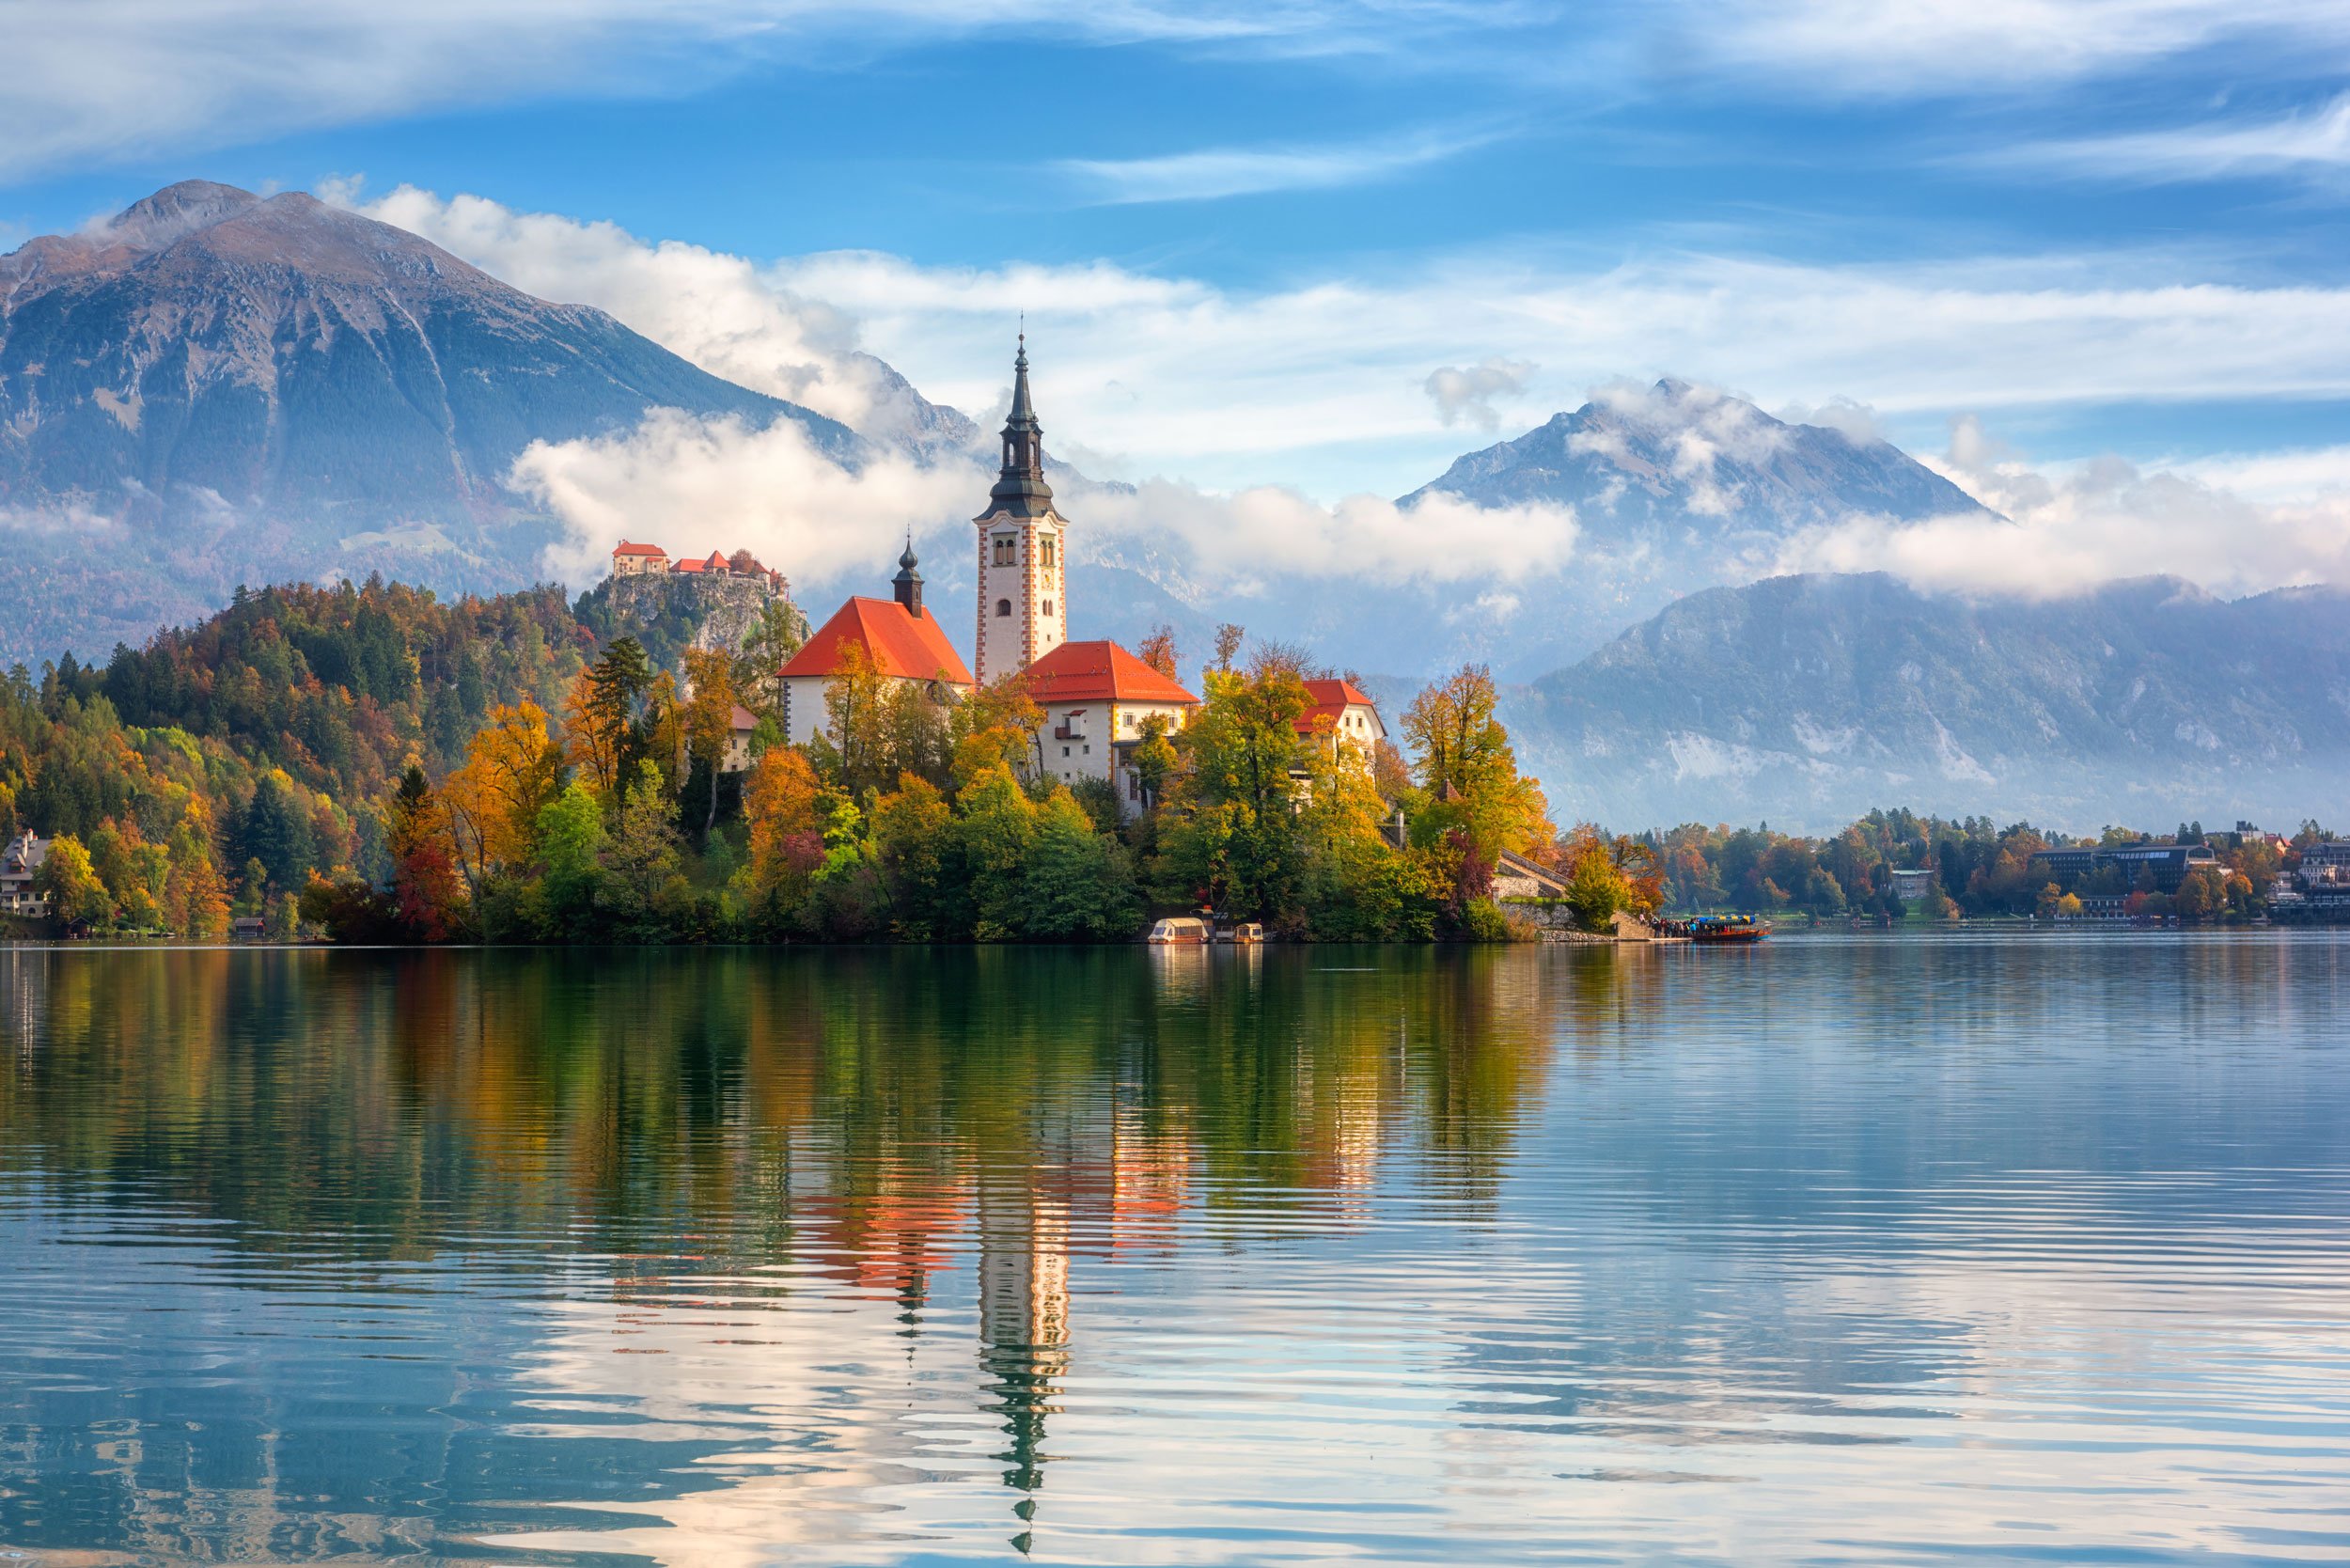 Slovenia, Austria & Italy: Alpine Valleys
